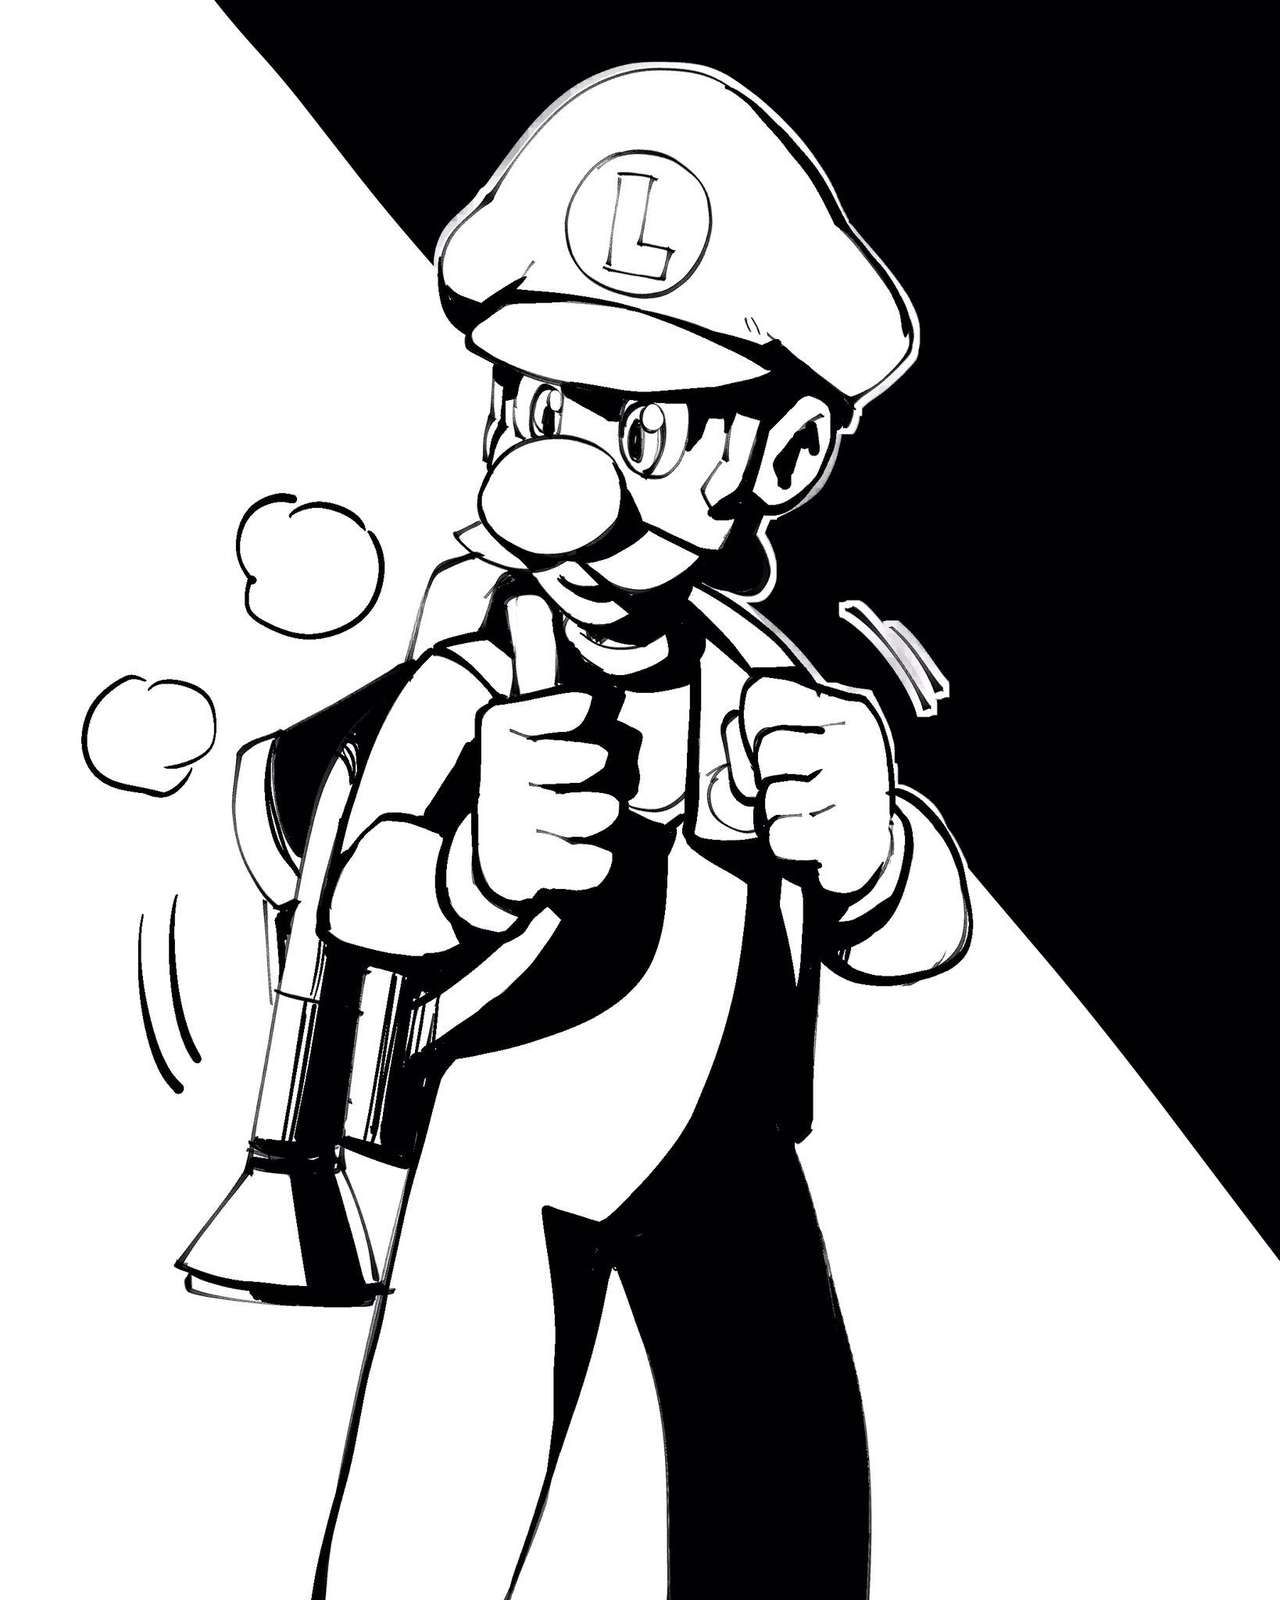 [Nisego] Inktober 2 - Luigi's Mansion (Super Mario Bros.) [Ongoing] 7